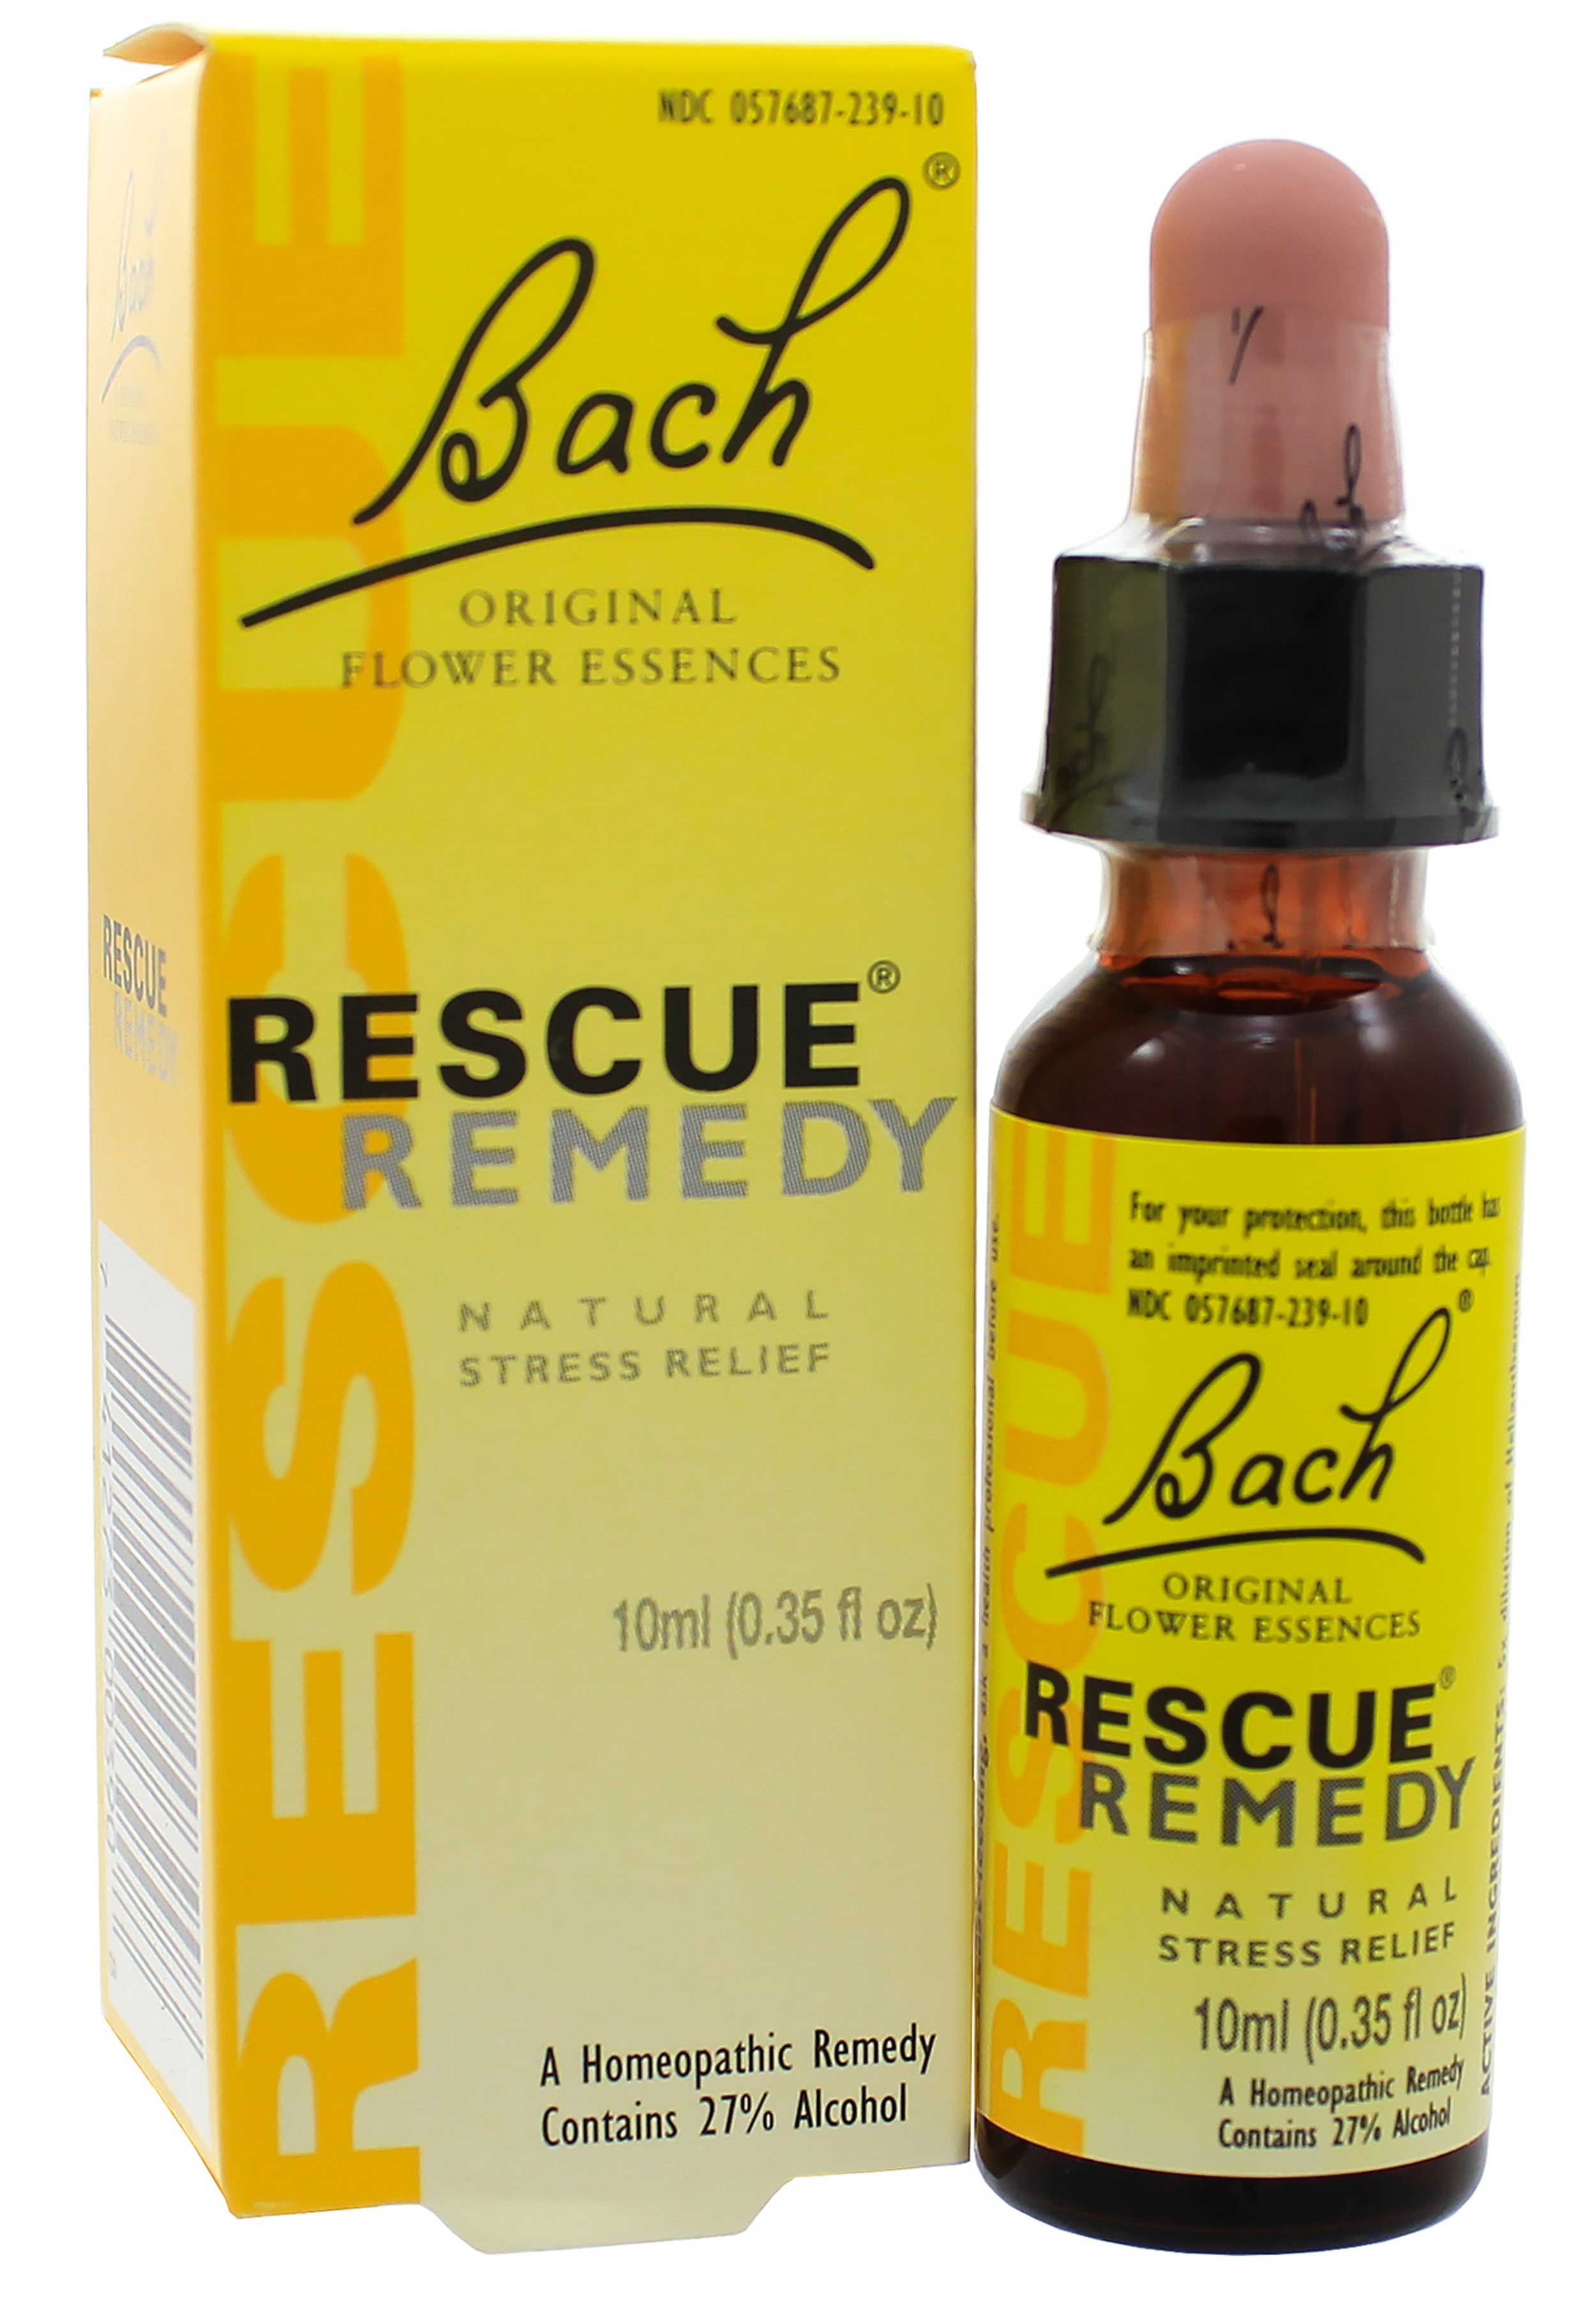 Bach Flower Remedies Rescue Remedy